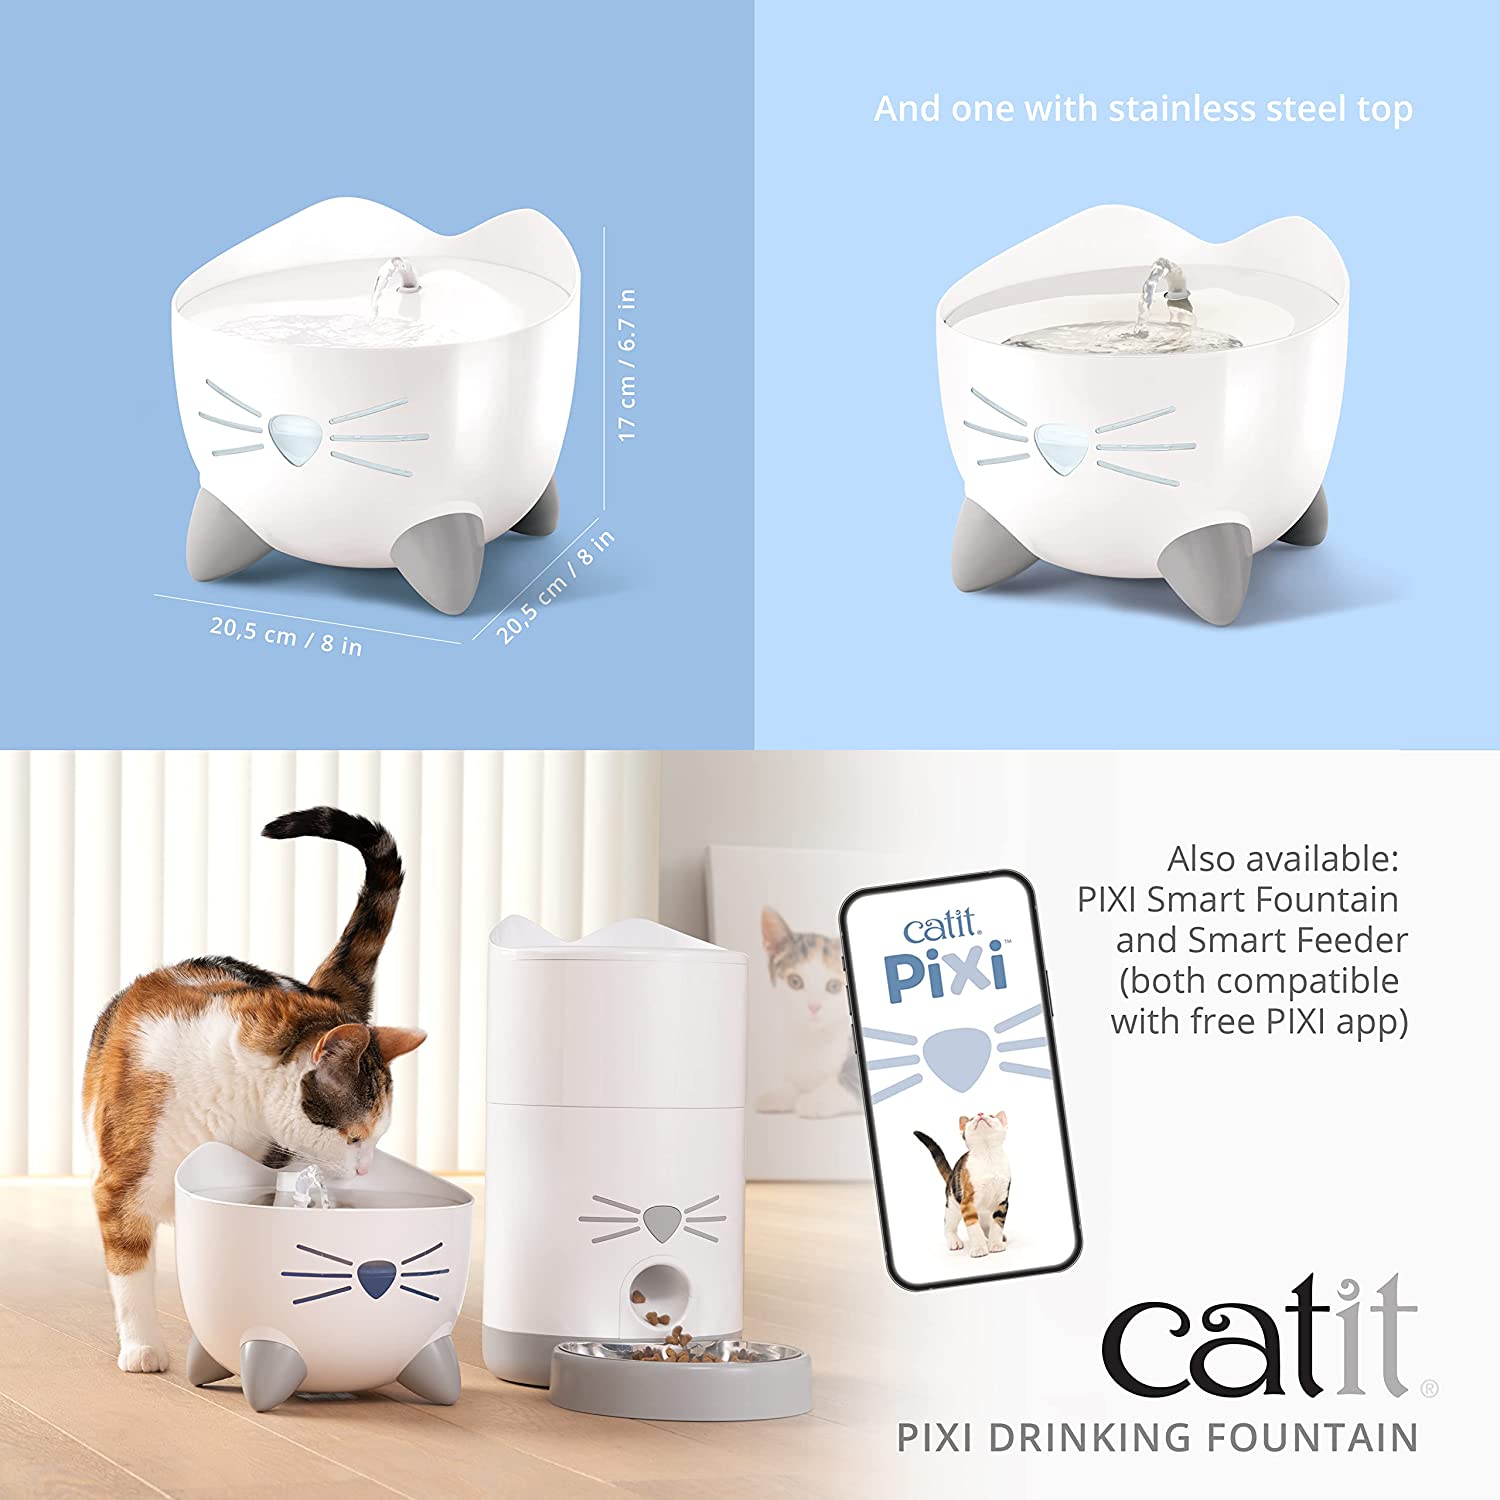 Catit PIXI Treat Dispensers - Products